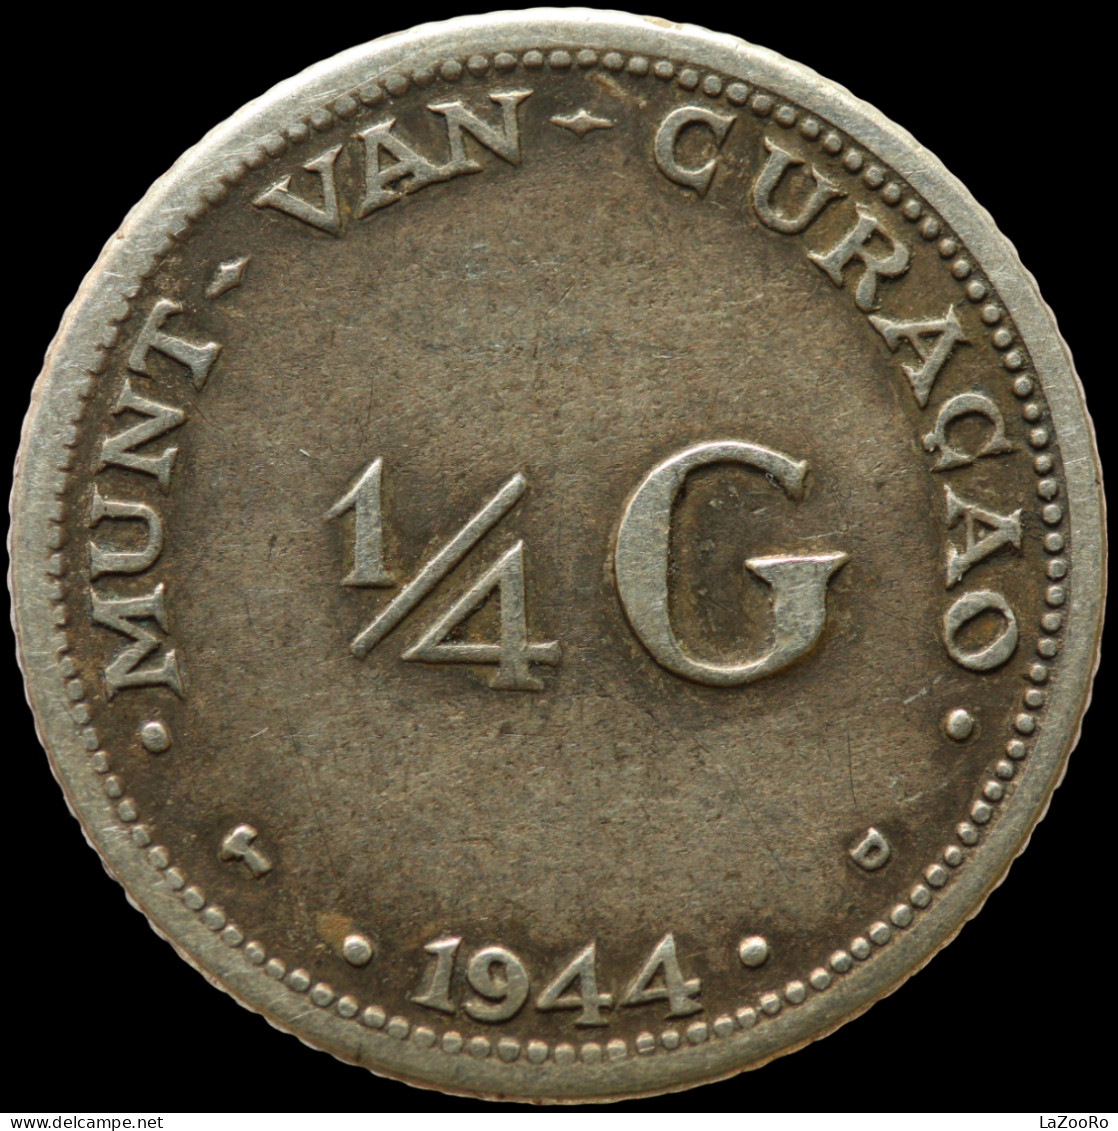 LaZooRo: Netherlands Curacao 1/4 Gulden 1944 VF / XF - Silver - Curaçao